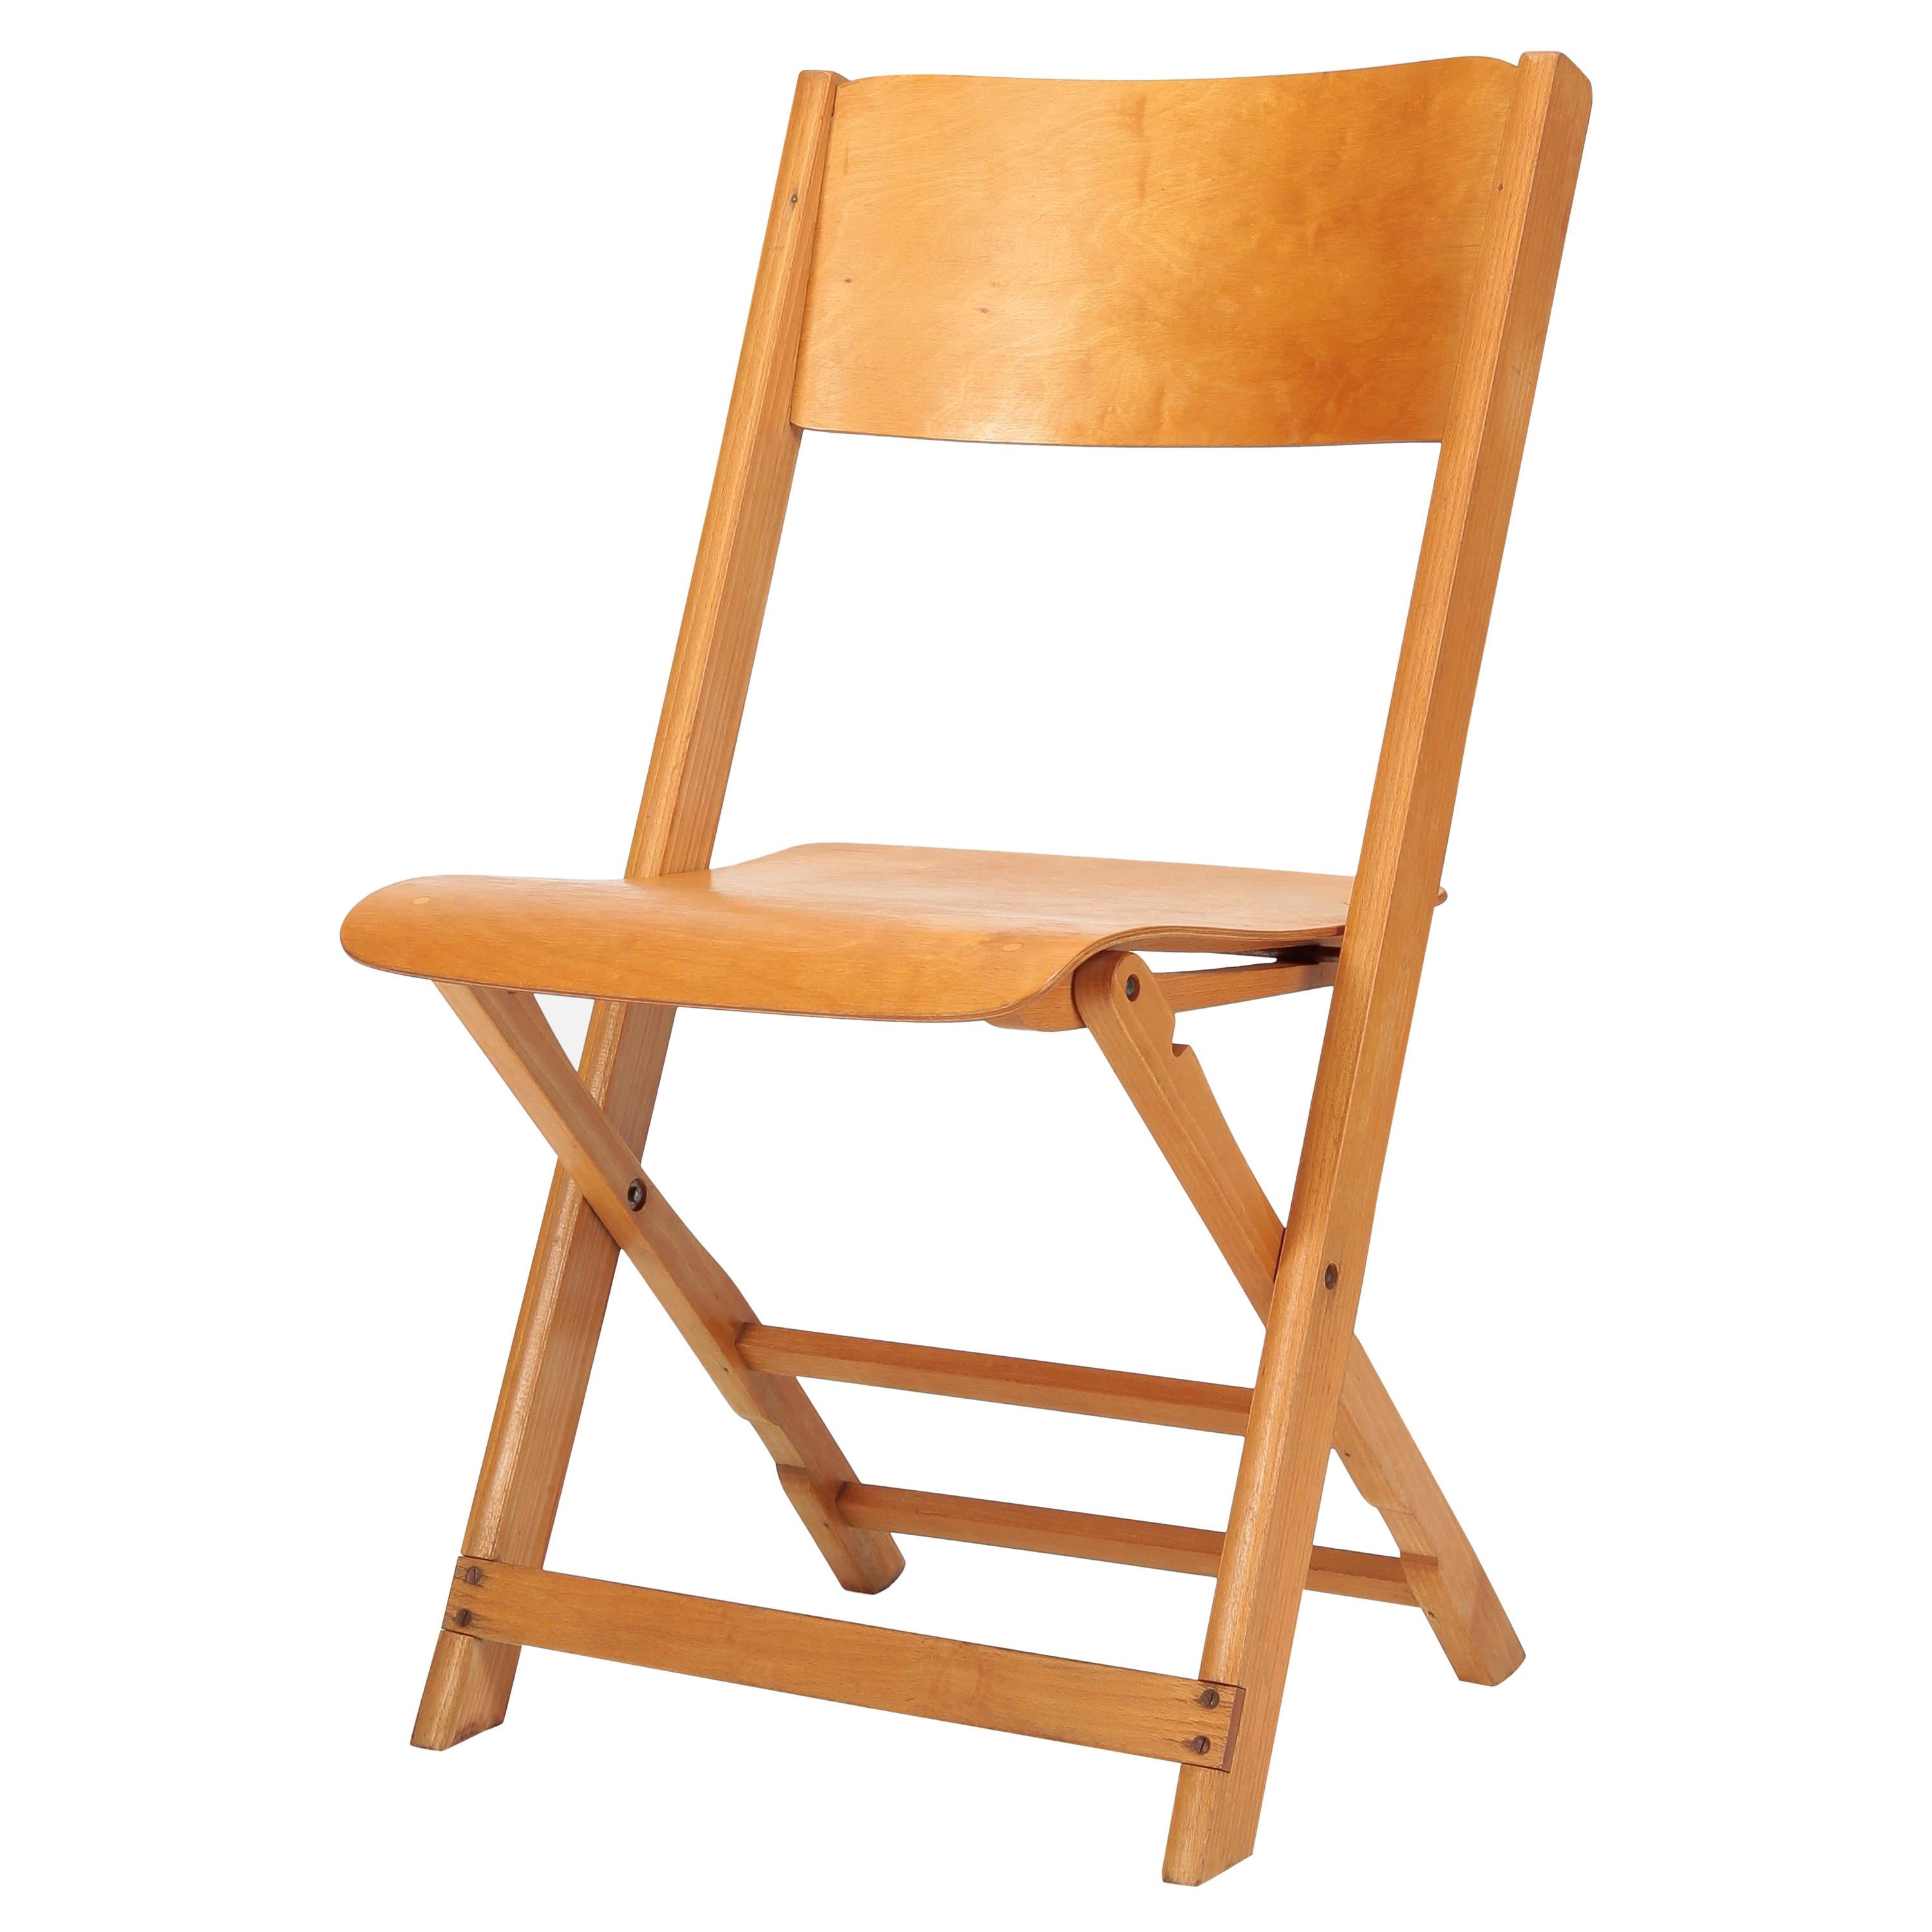 Swiss Midcentury Modern Birchwood Folding Chair, Wohnbedarf 1940s, Light Brown For Sale